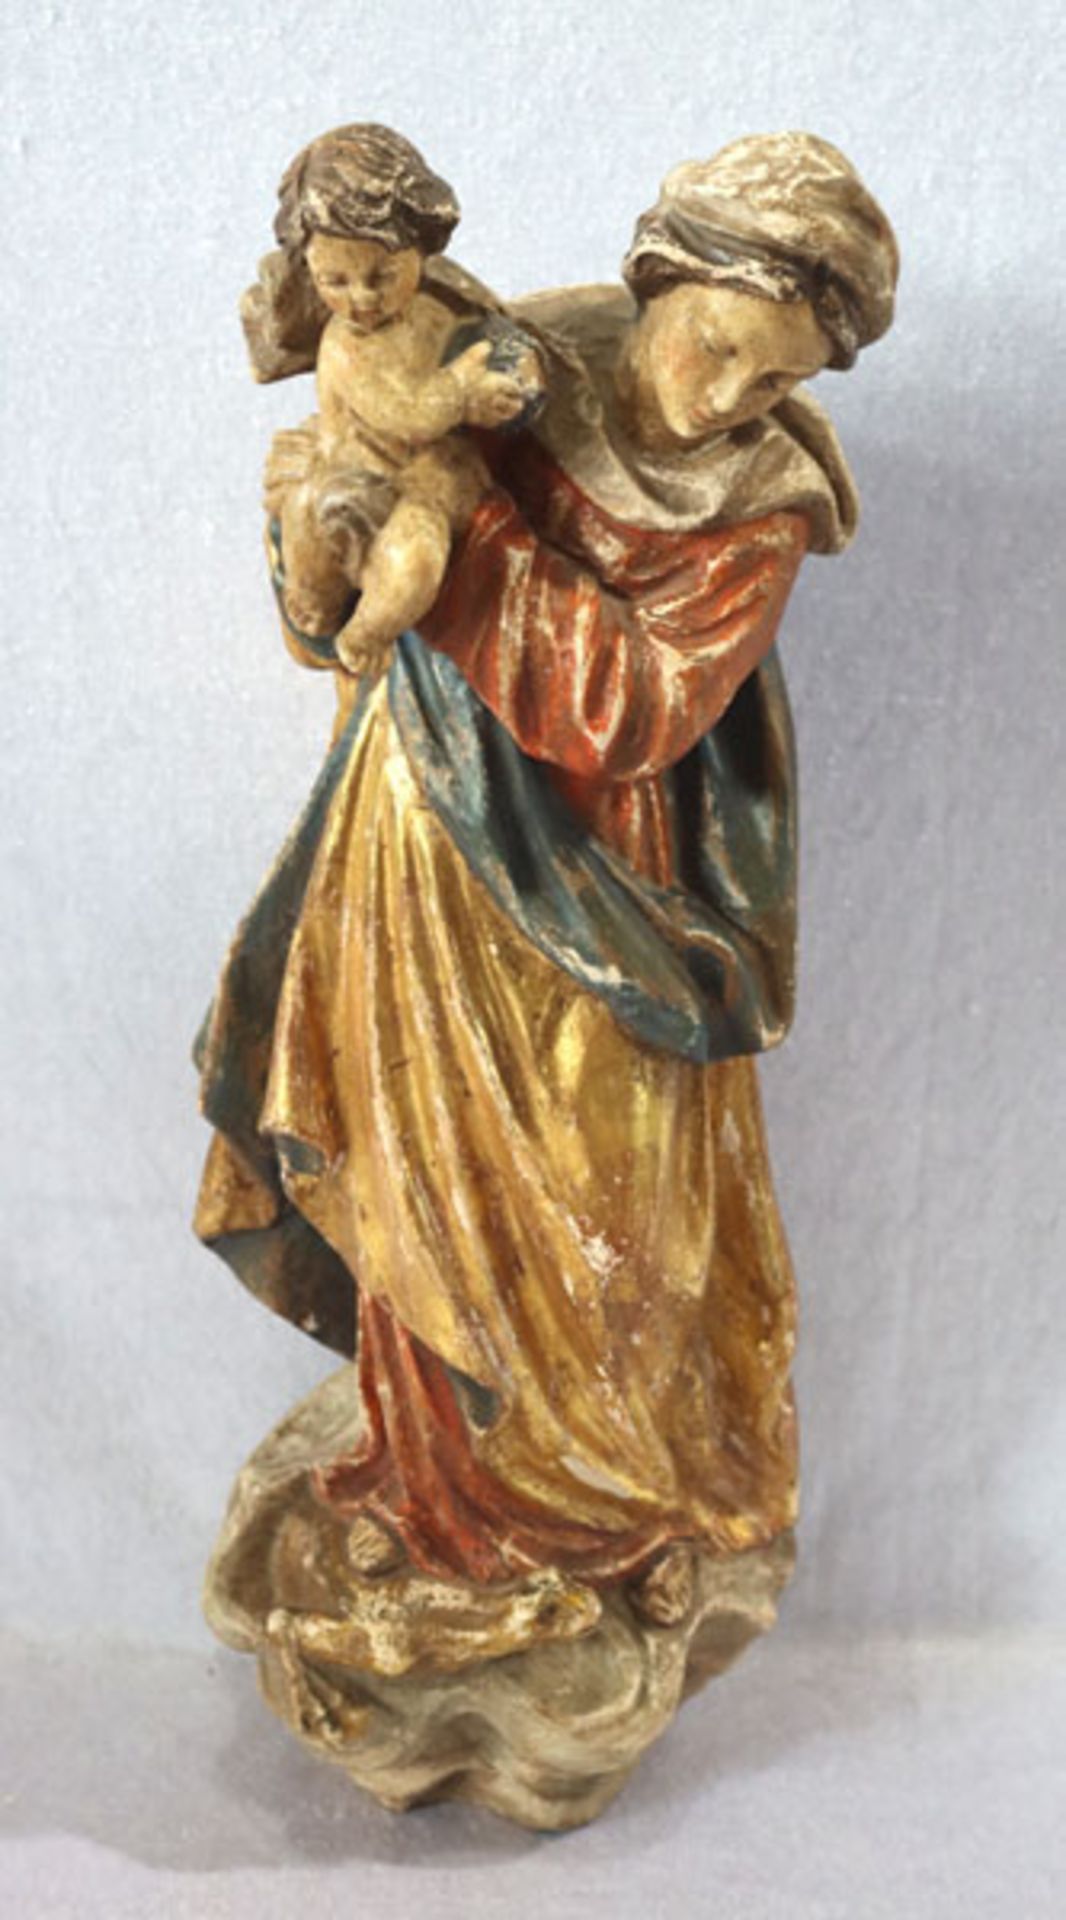 Holz Figurenskulptur 'Maria mit Kind', farbig gefaßt, Fassung beschädigt, H 40 cm, B 15 cm, T 11 cm,